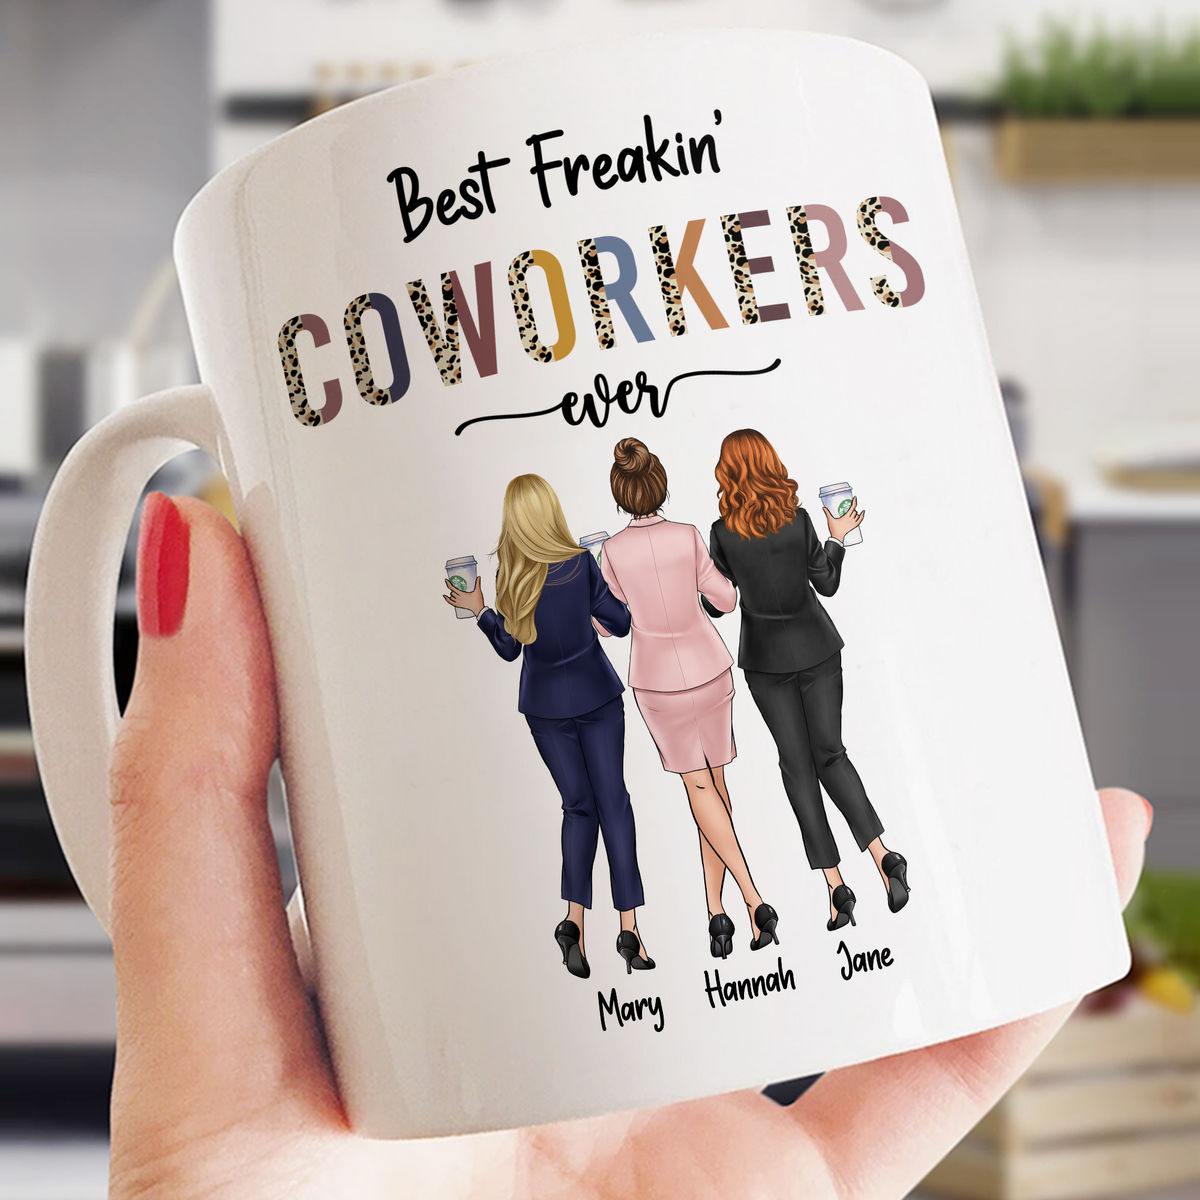 Personalized Mug - Colleague Mug 2023 - Best Freakin' Coworkers Ever - Up to 6 Ladies - Christmas Gifts for Work Besties